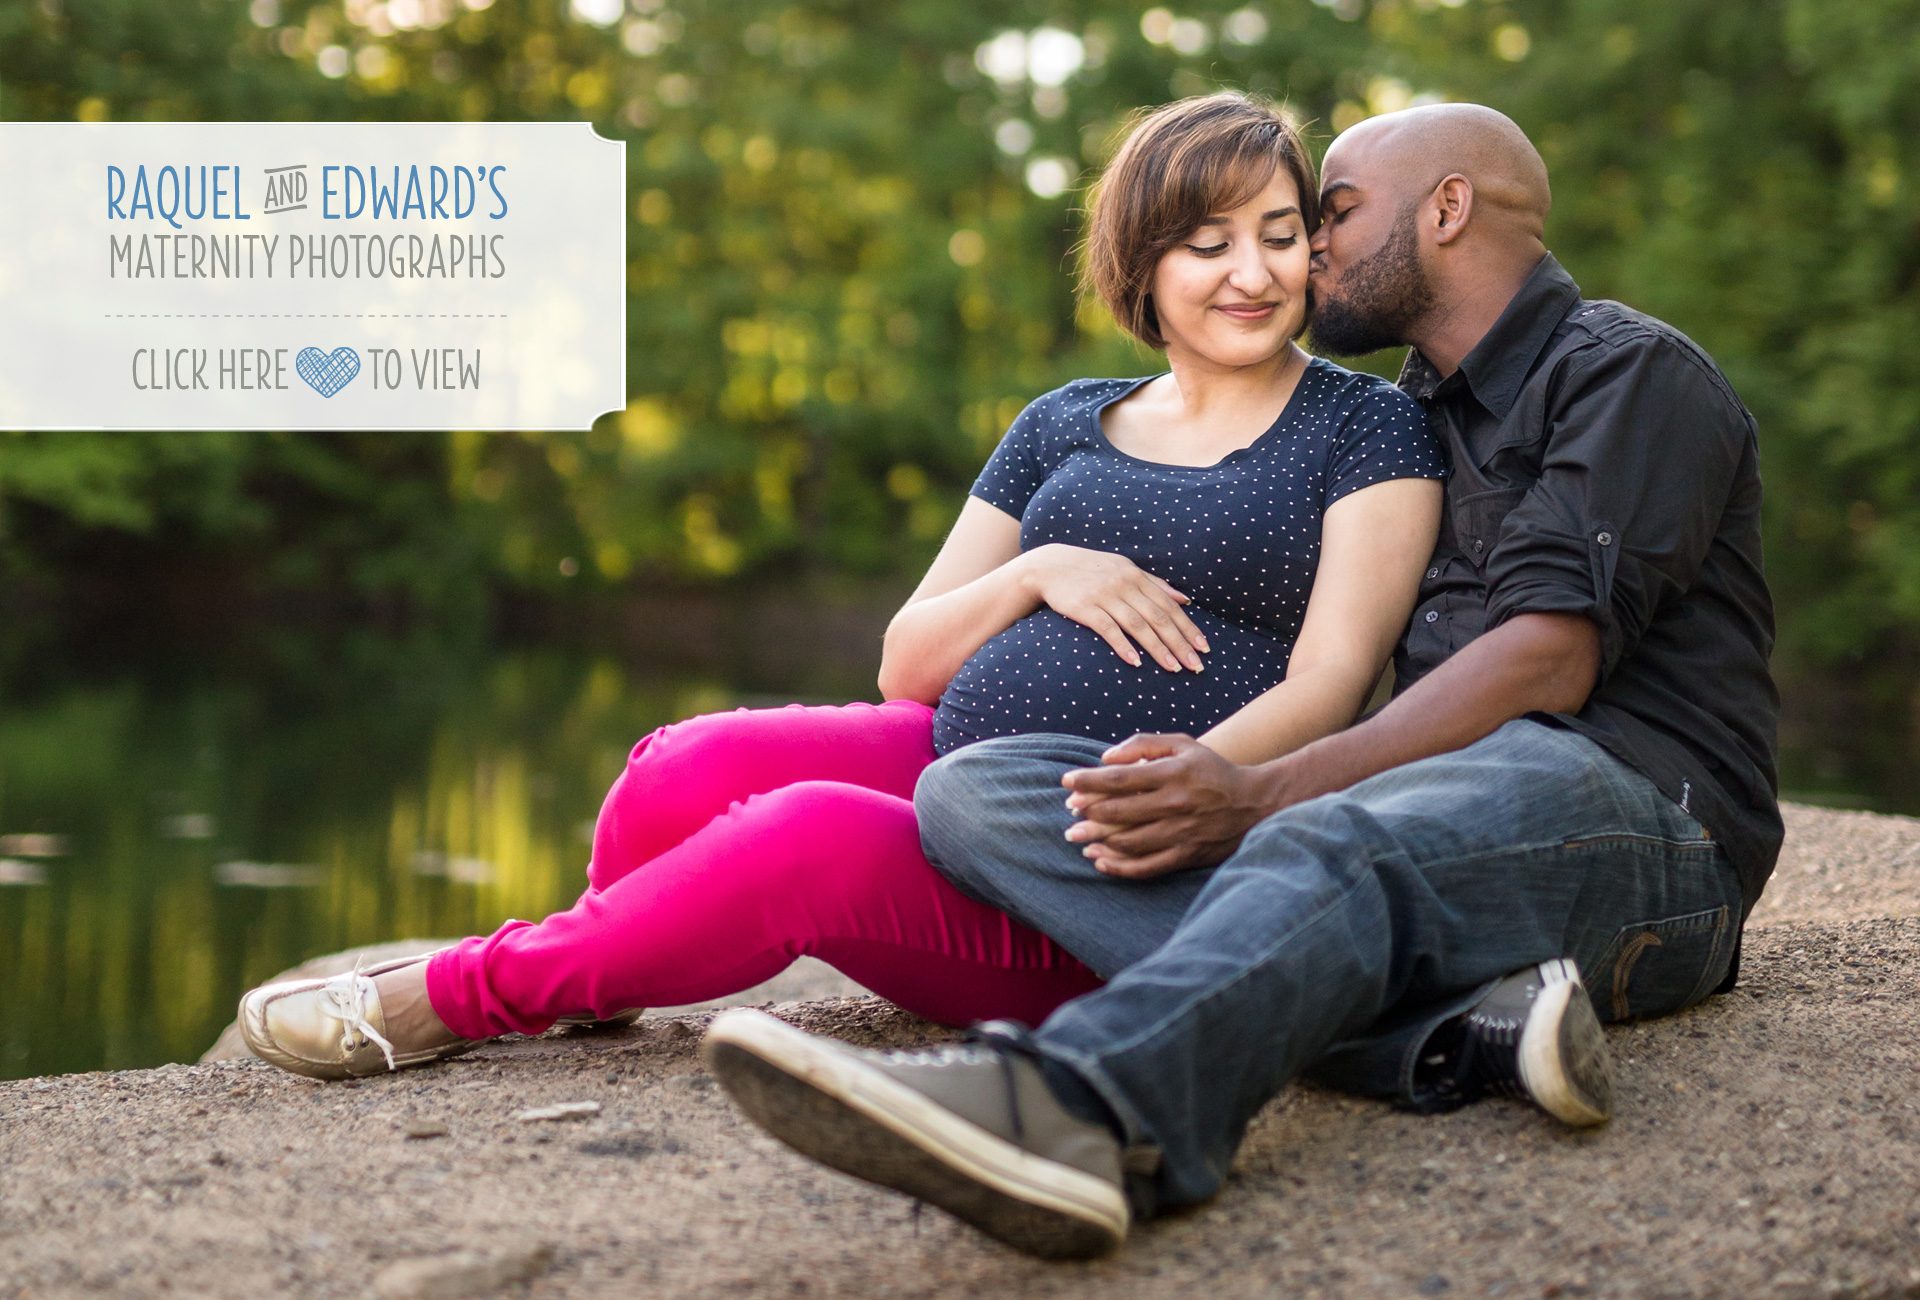 Edward and Raquel | Maternity Photographs at Lincoln Brick Park, Grand Ledge